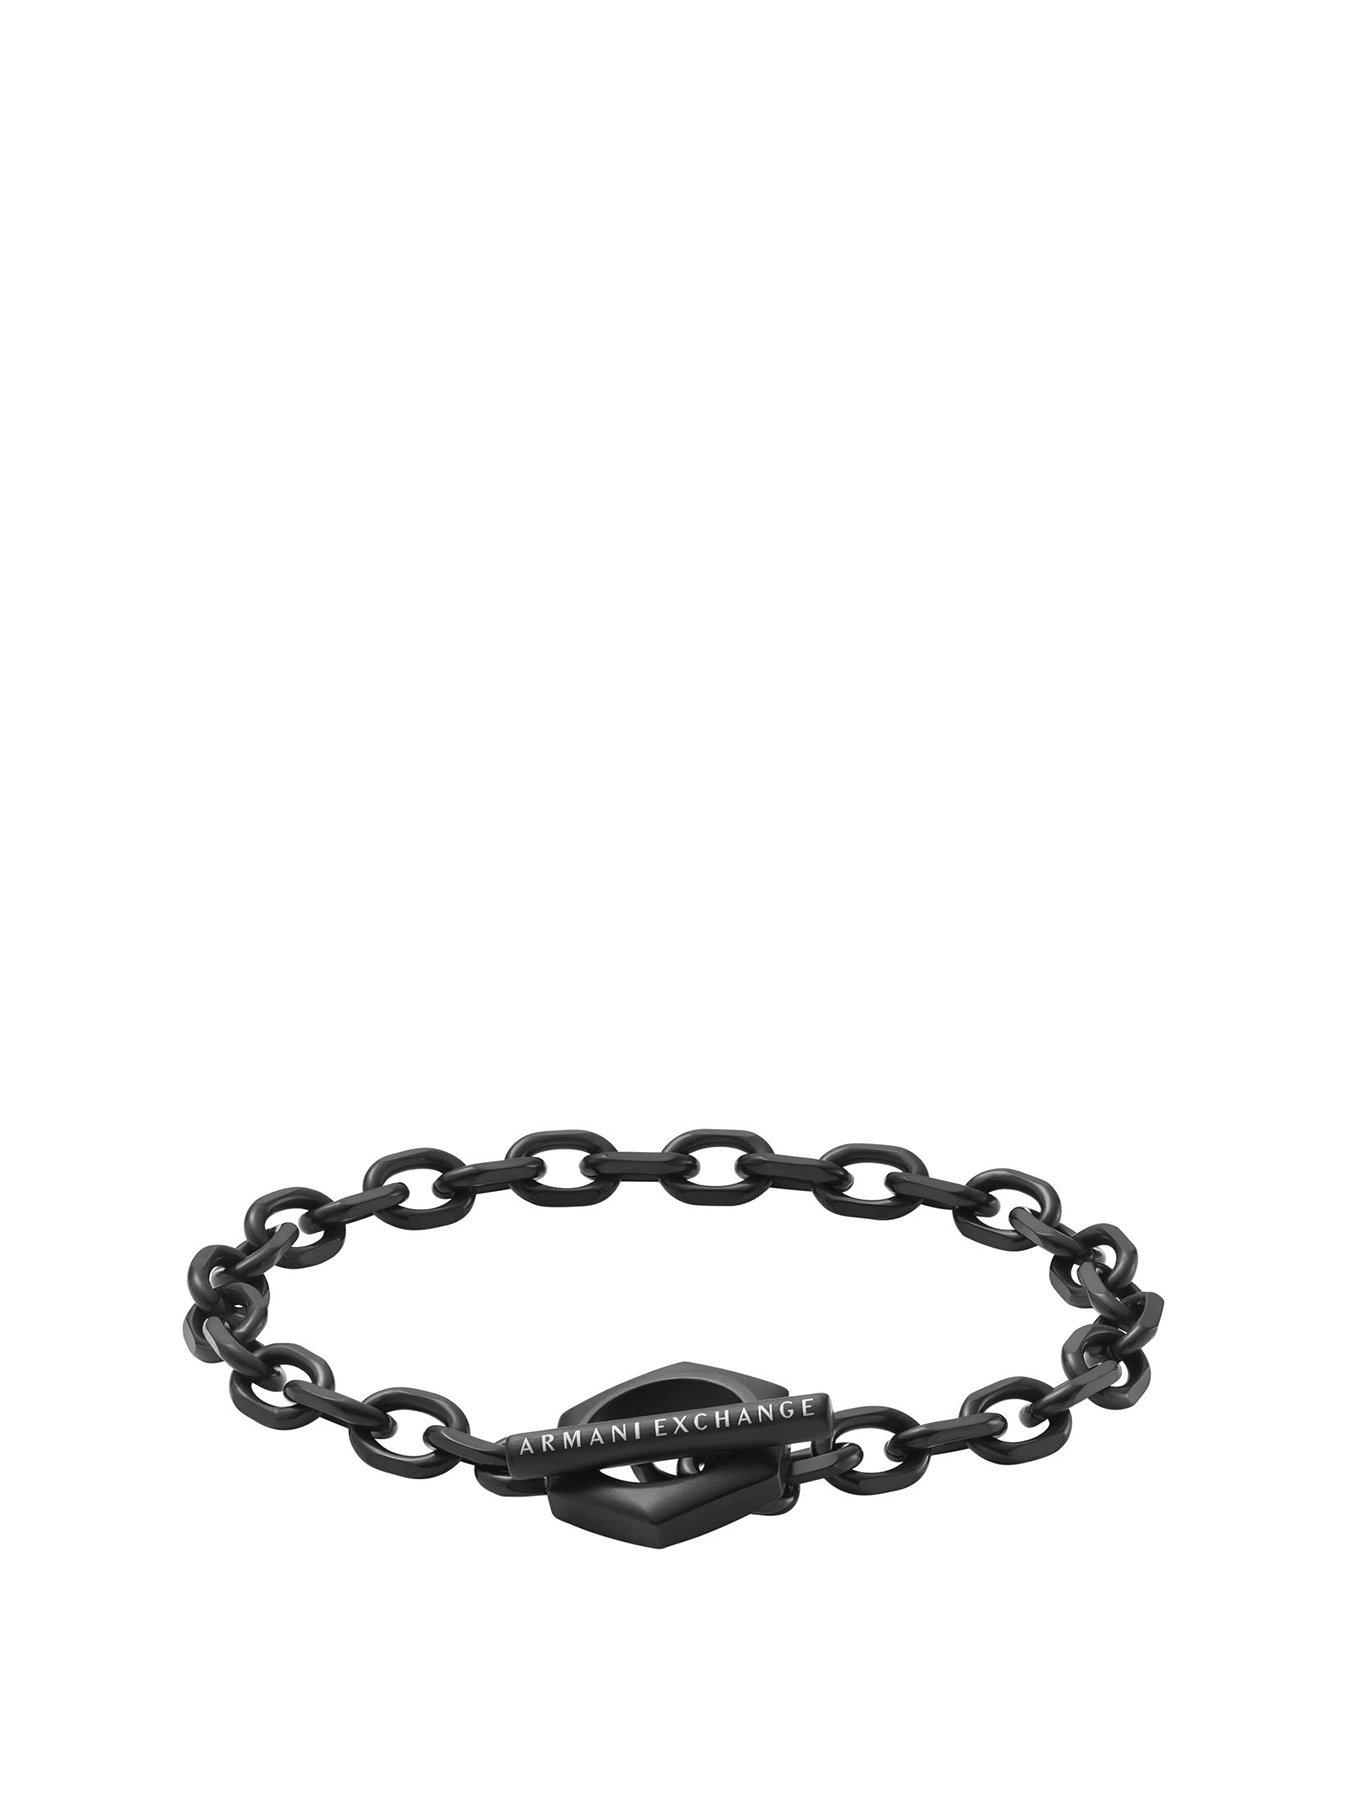 Armani Exchange A|Z Black Stainless Steel Chain Bracelet 